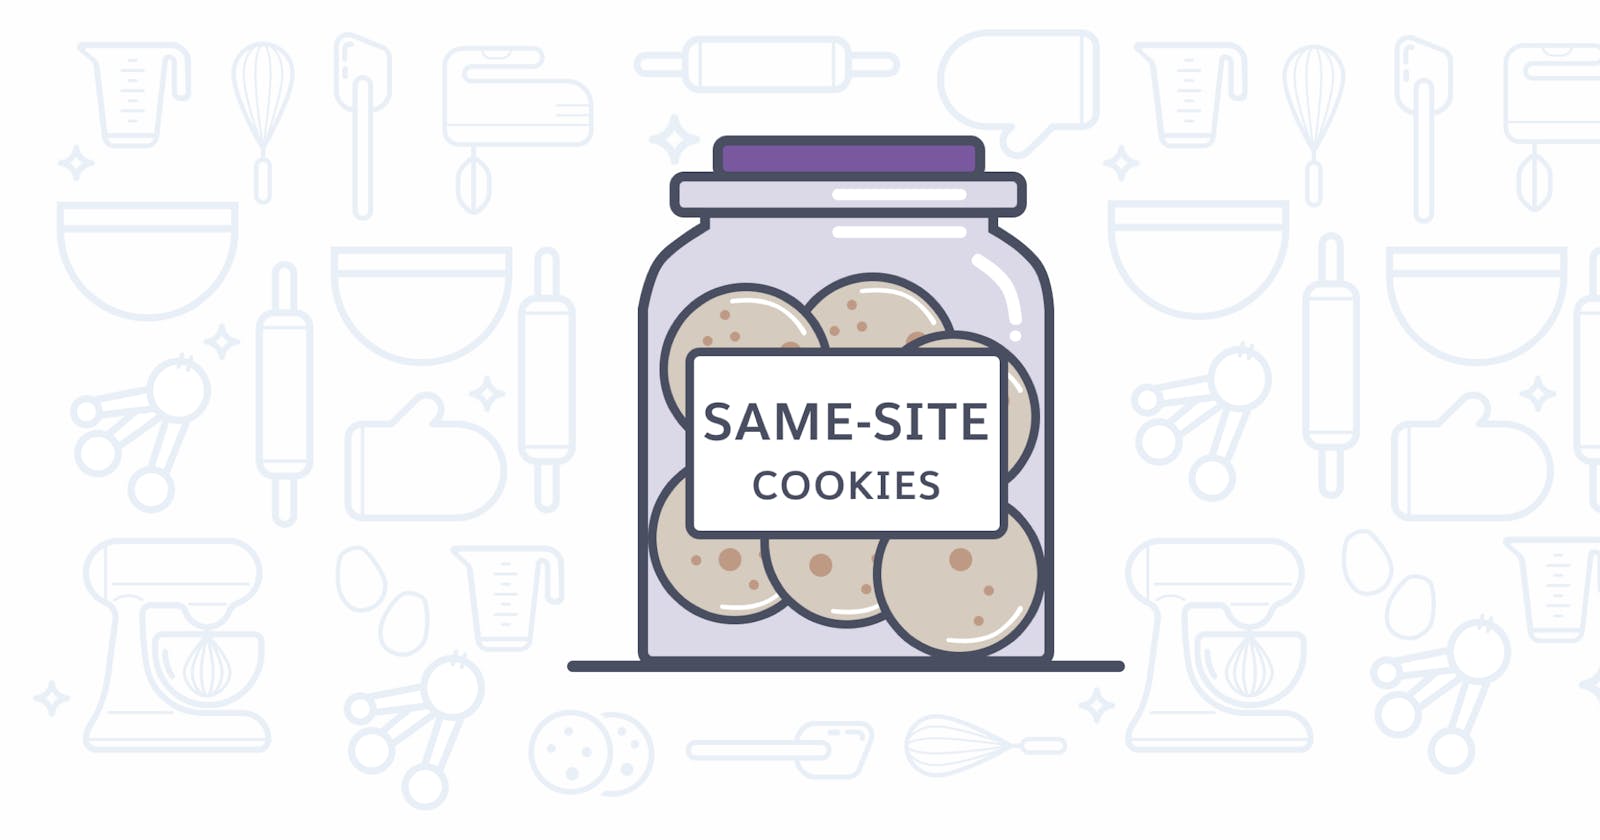 The impact of SameSite cookies updates